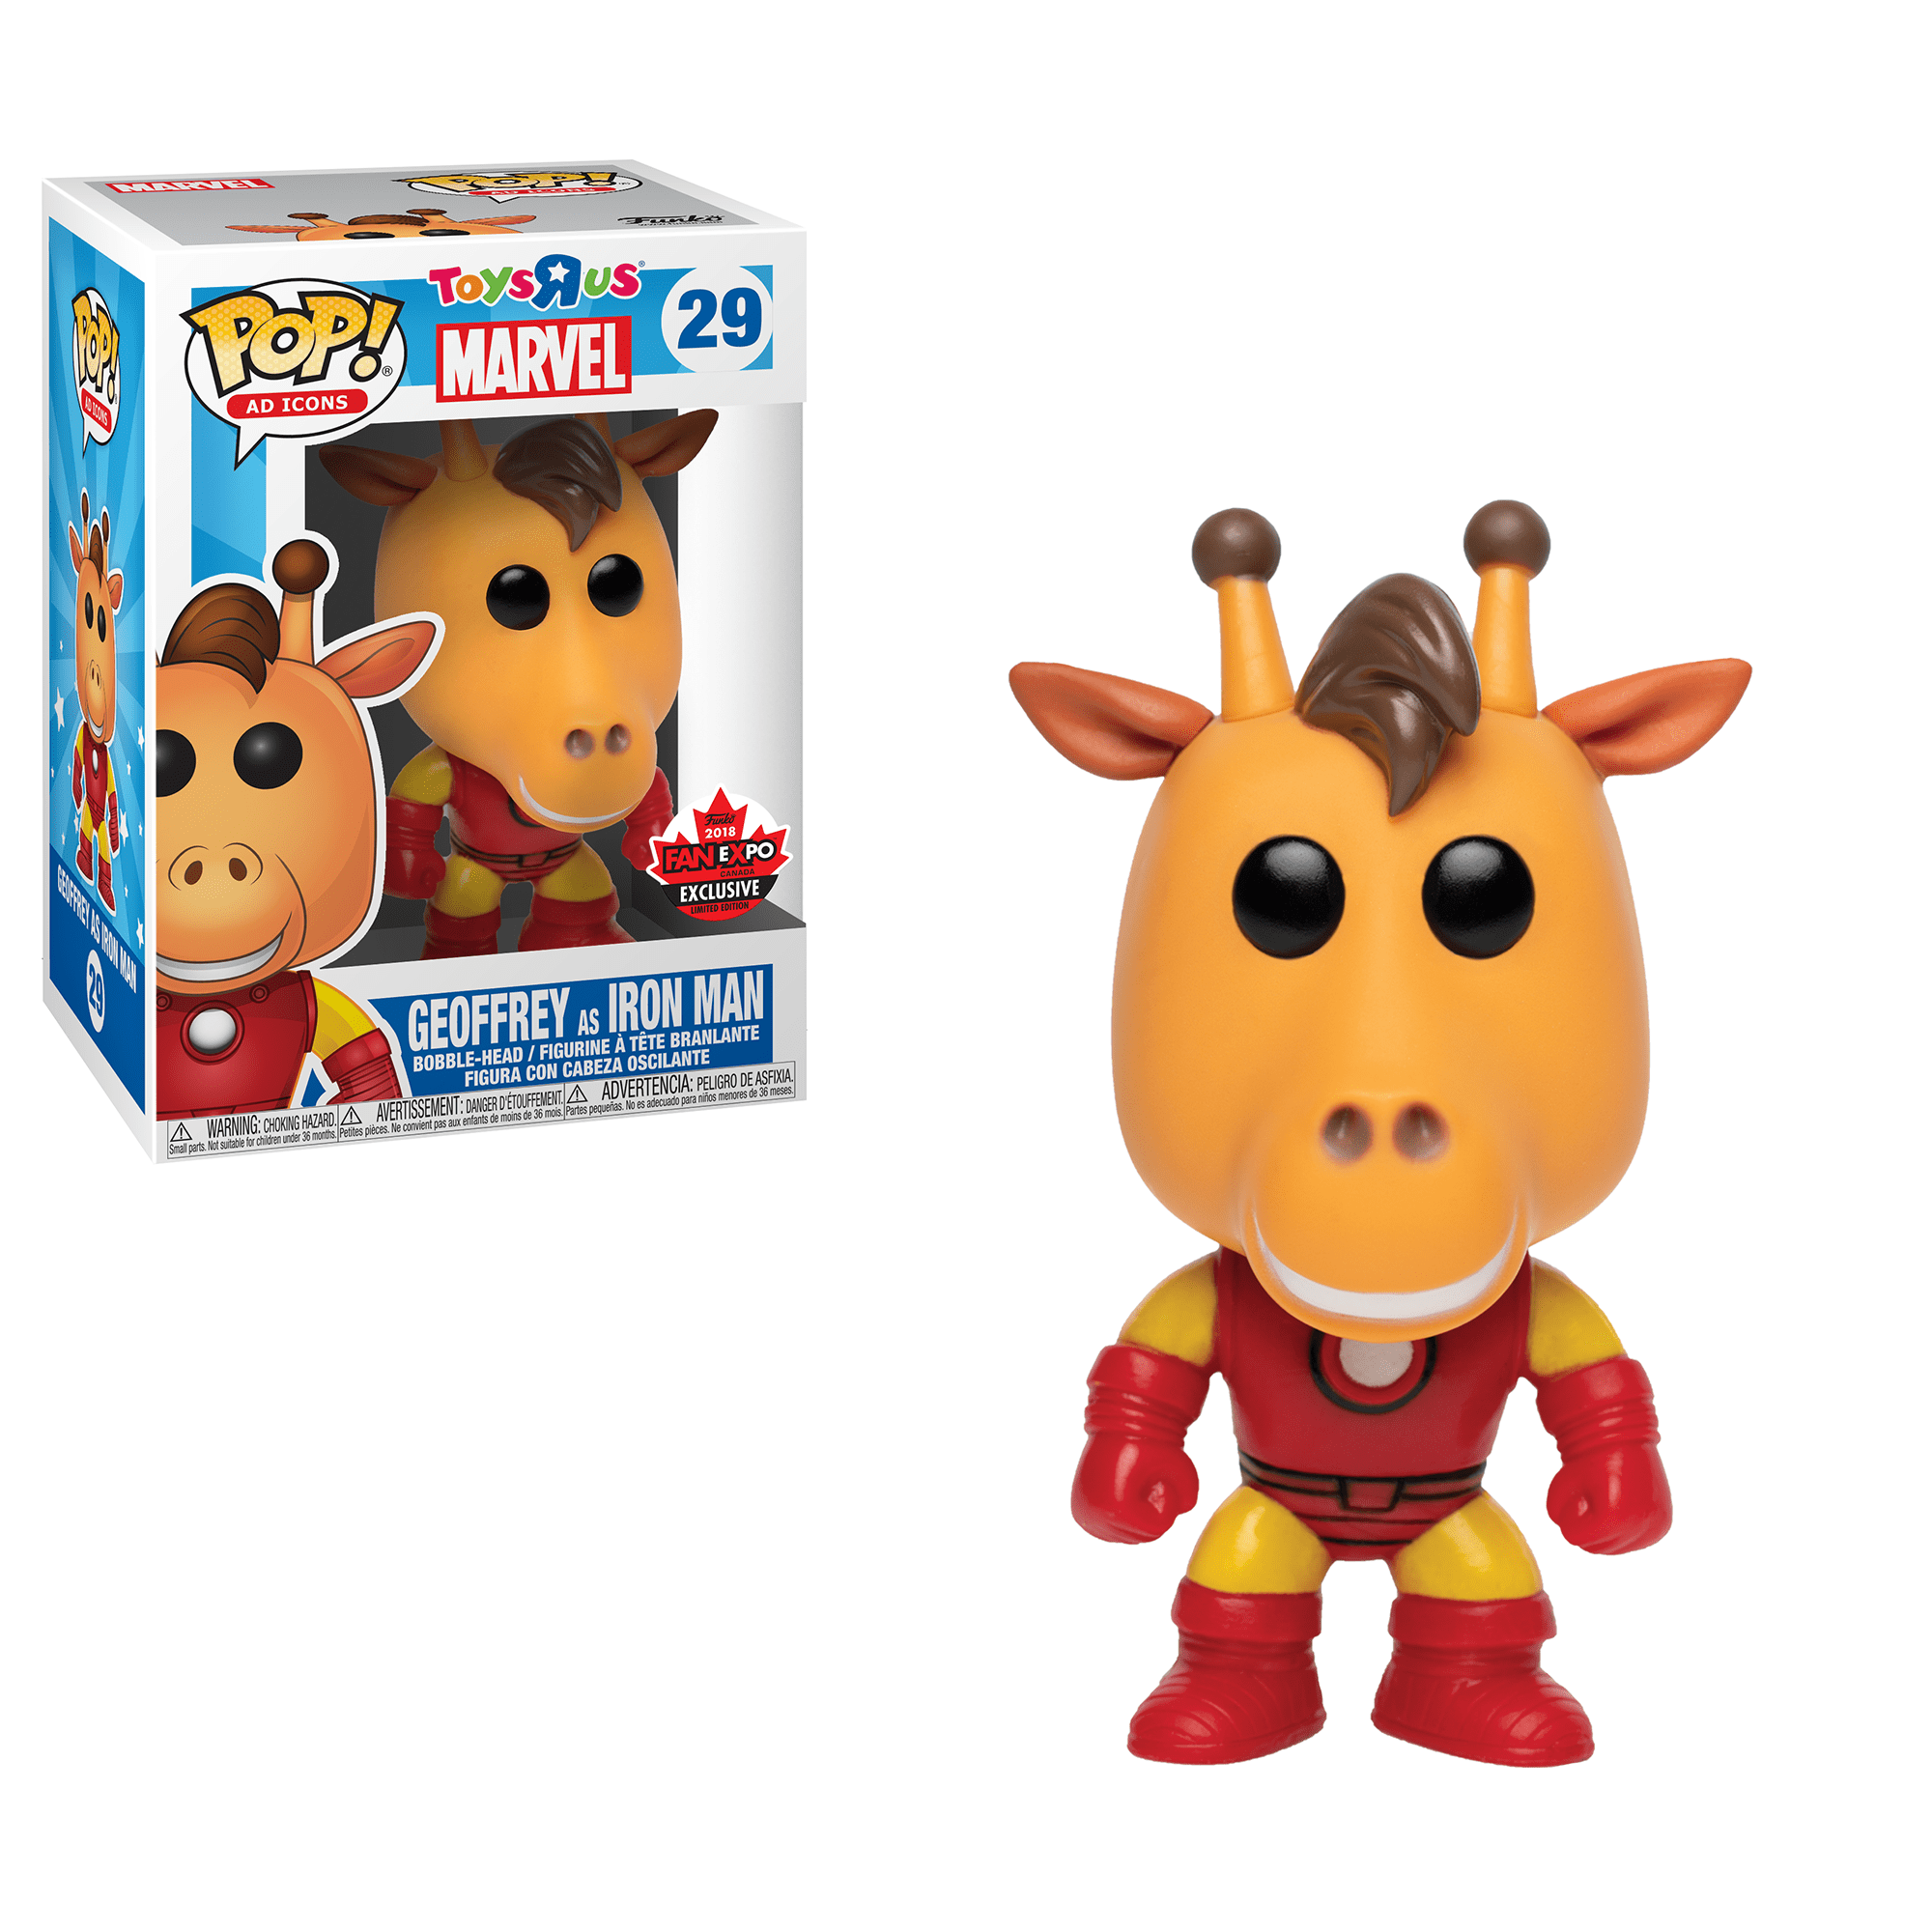 Funko Pop! Geoffrey the Giraffe (as Iron Man) (Ad Icons)